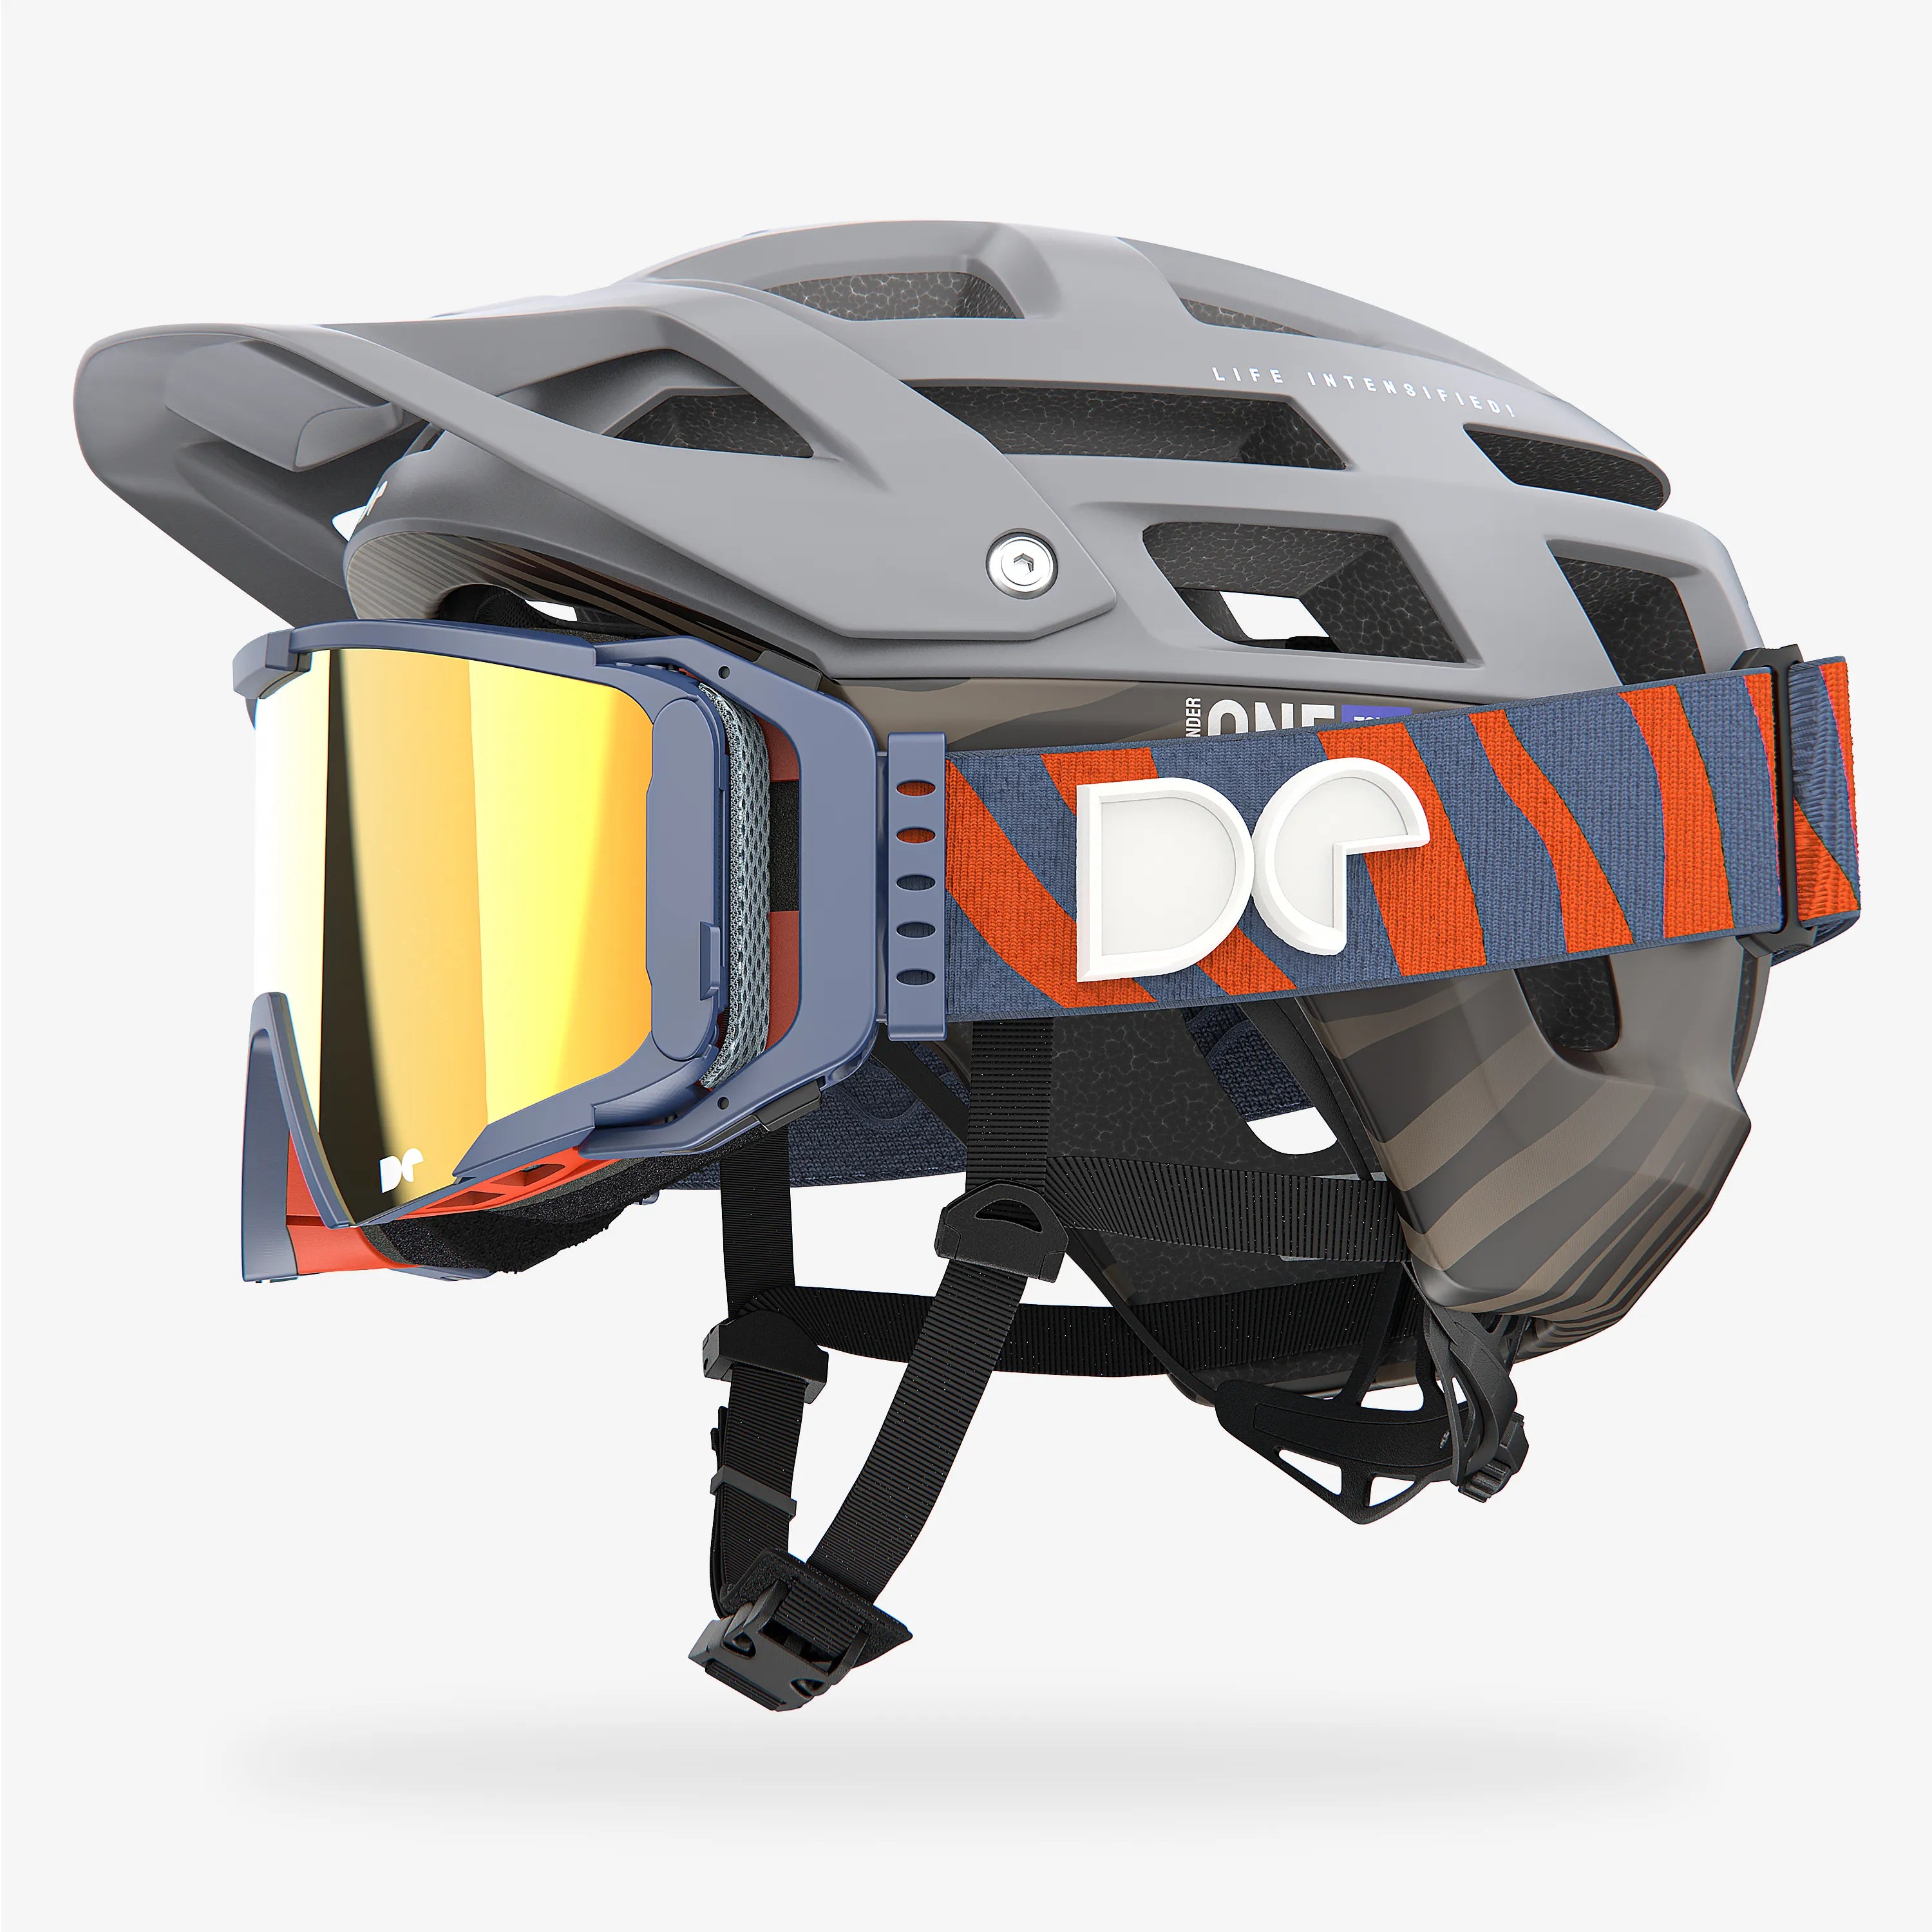 Defender One Tour Nardo Gray Mountain Bike Helmet + Sporter Boostup All Road Goggle グレー マウンテンバイク ヘルメット + MX ゴーグル